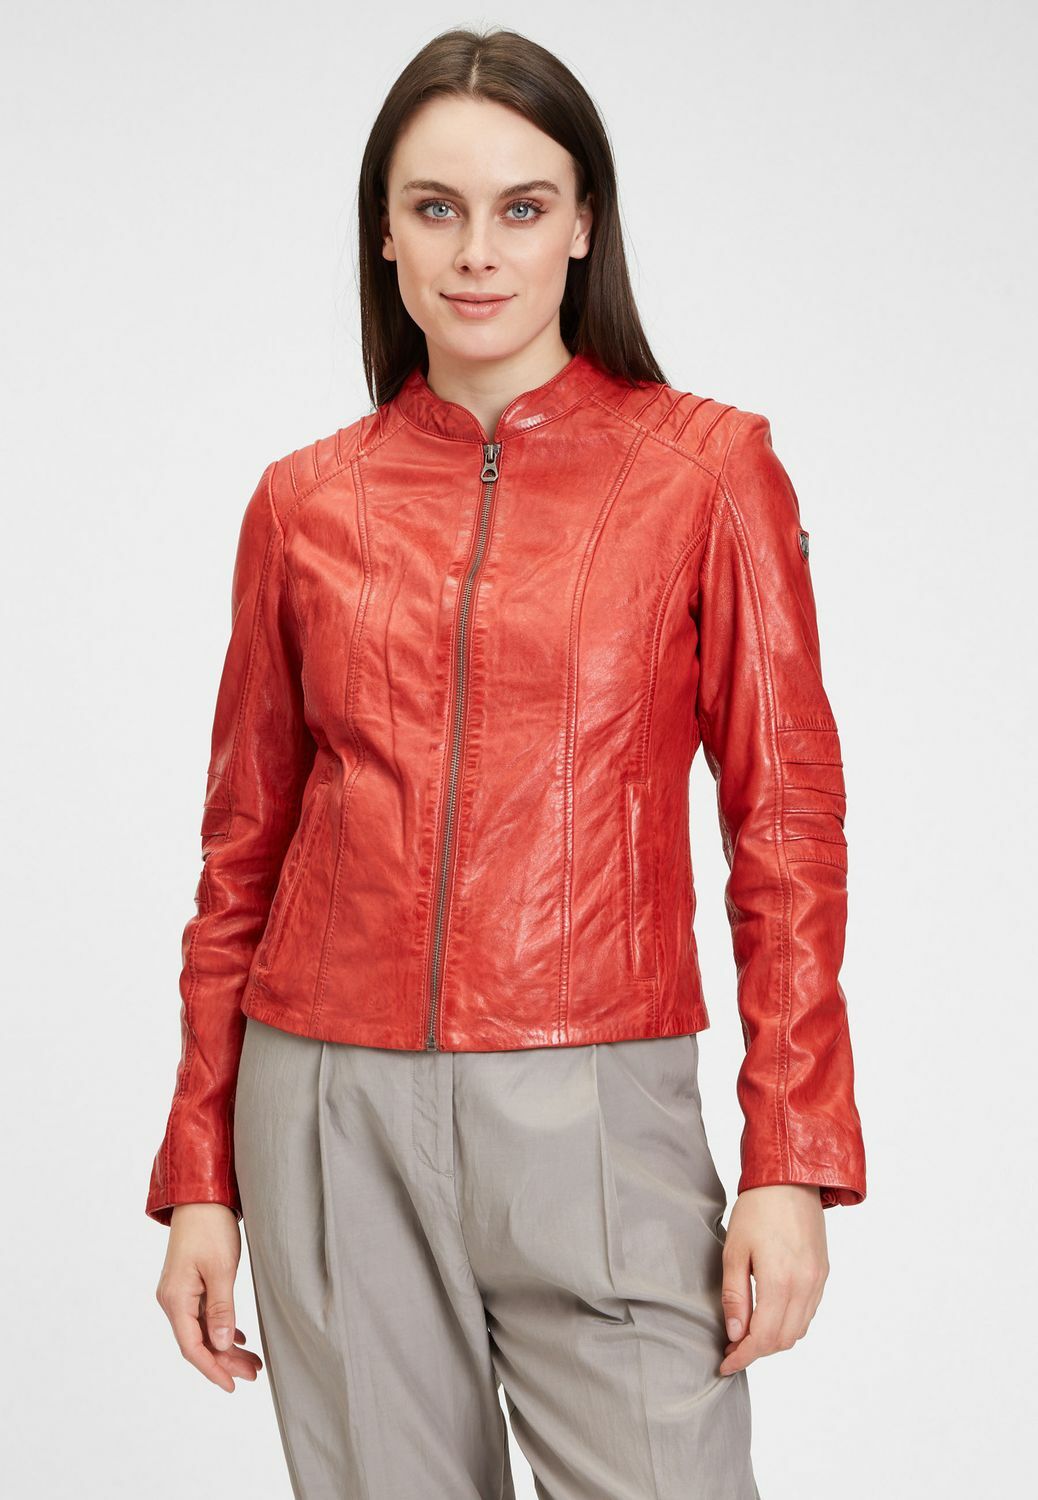 Dámská kožená bunda červené barvy